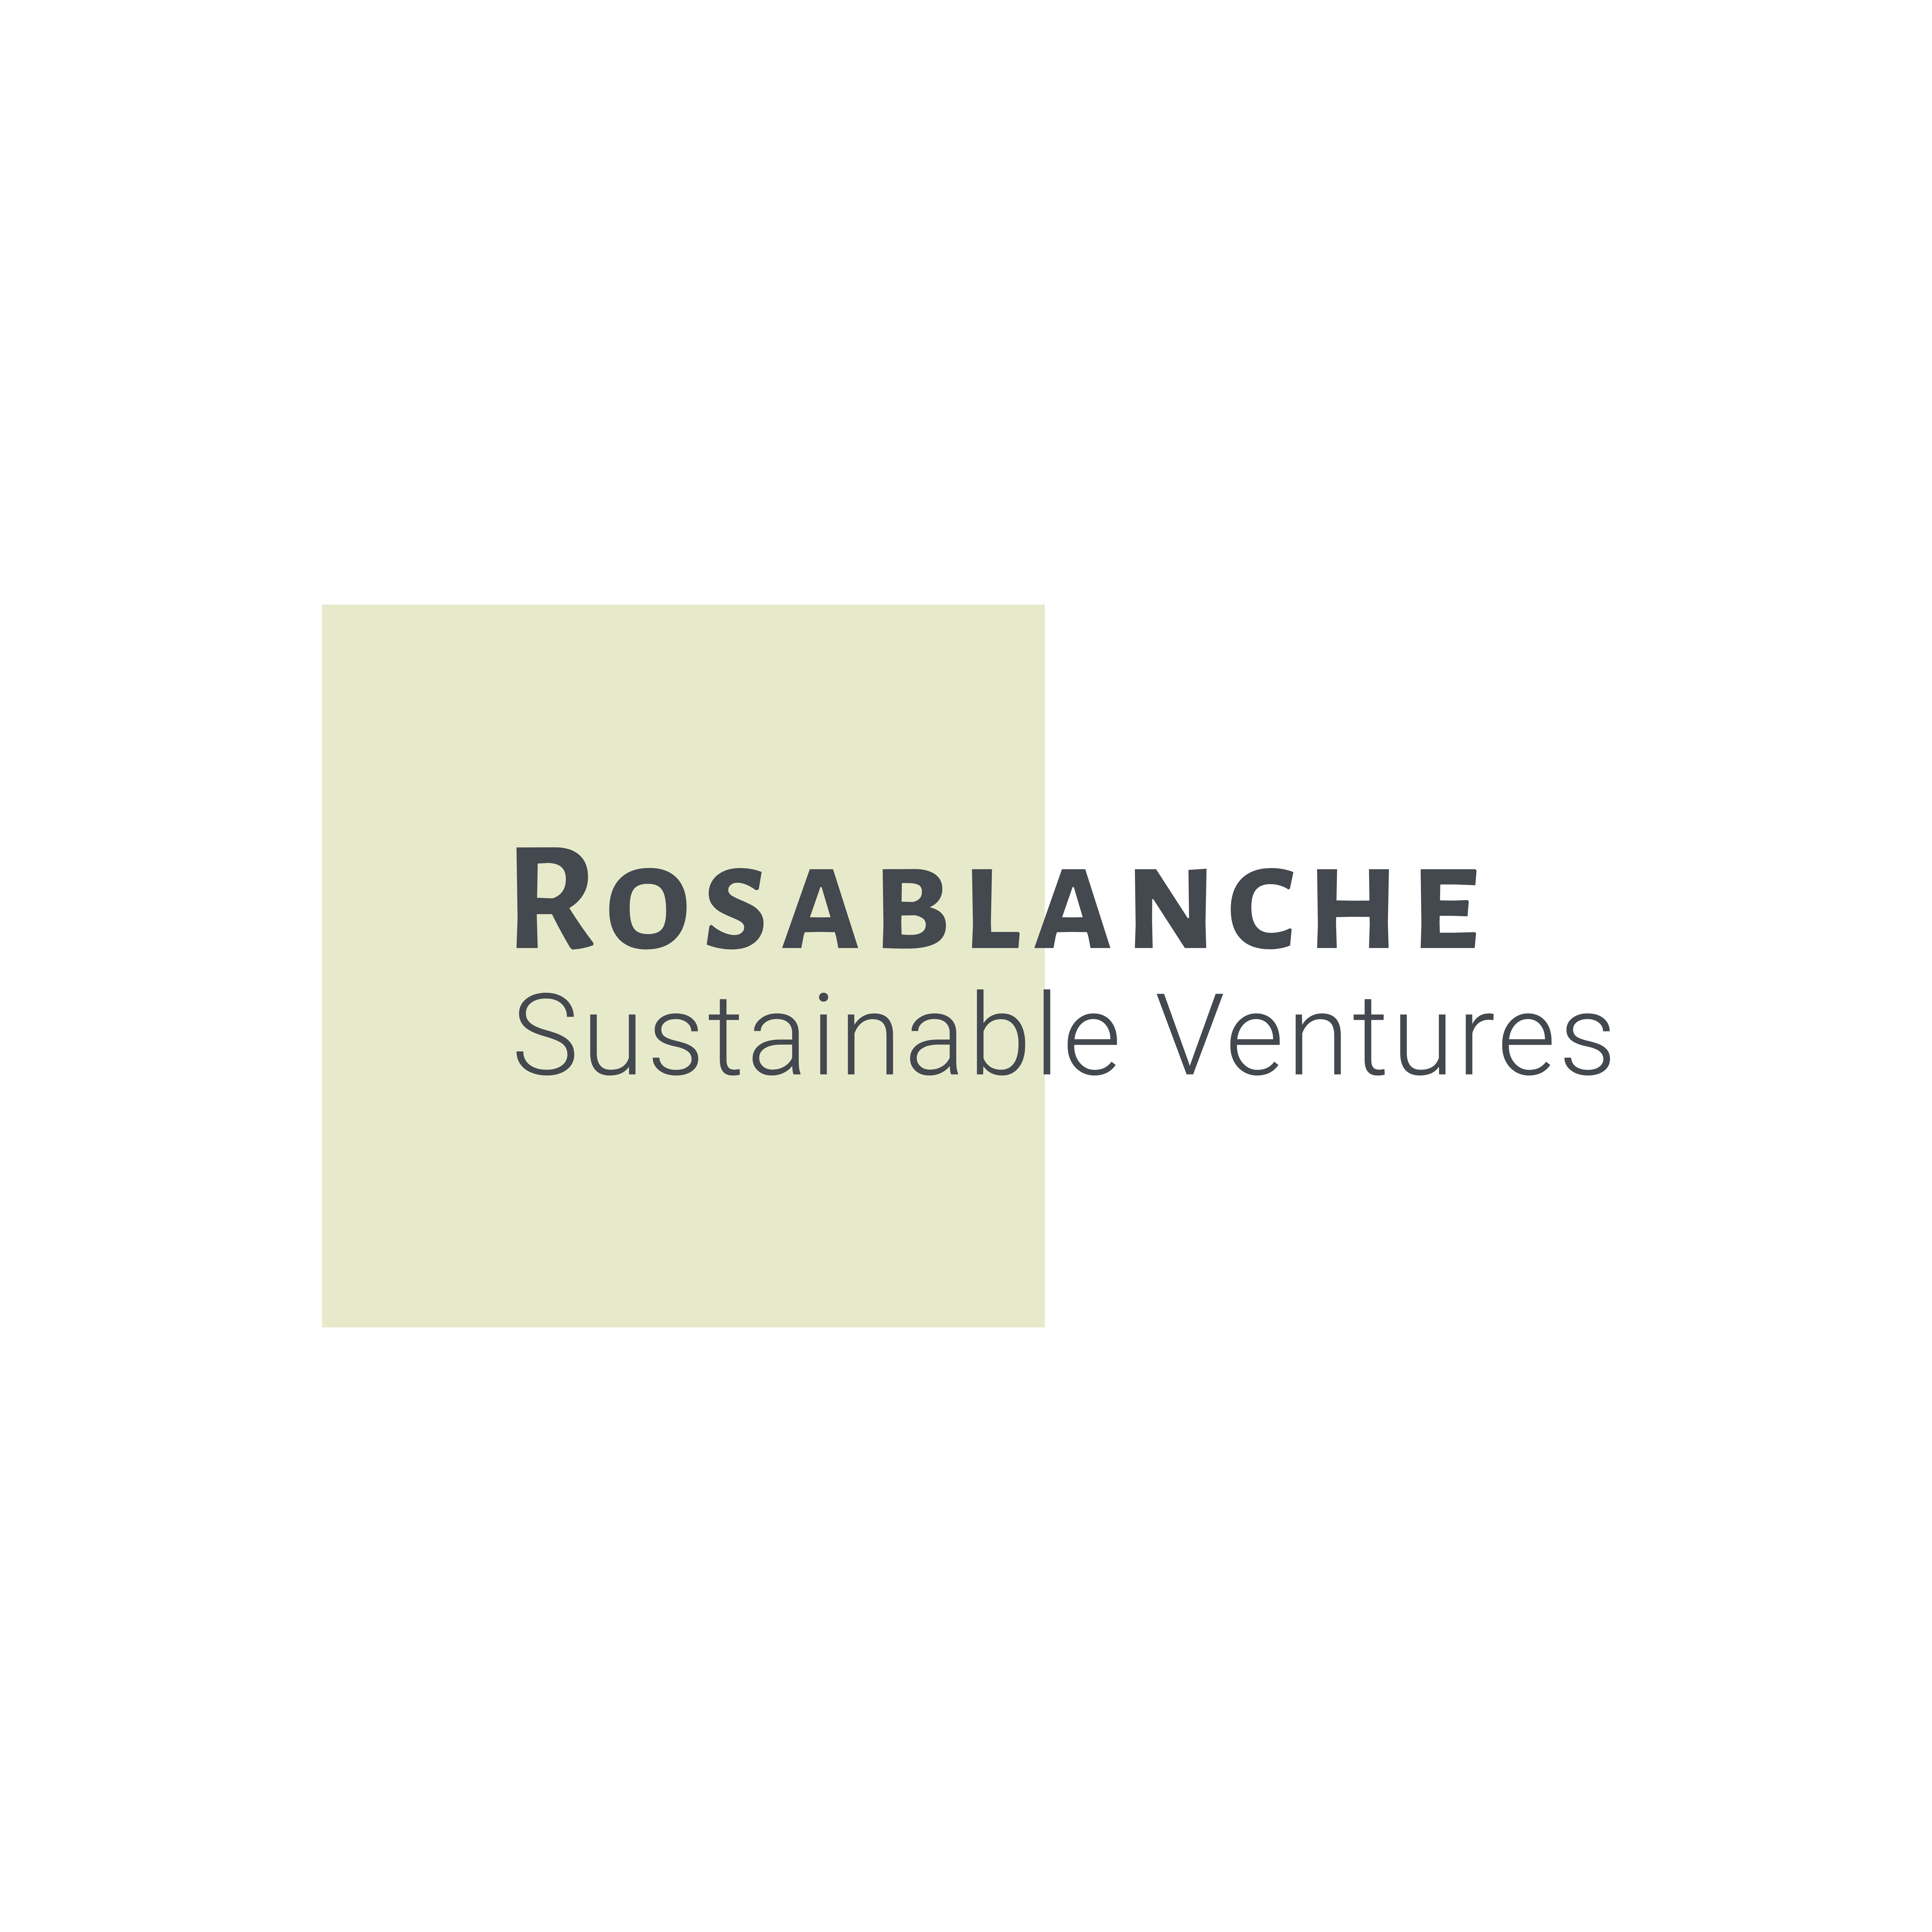 Rosablanche Ventures SA